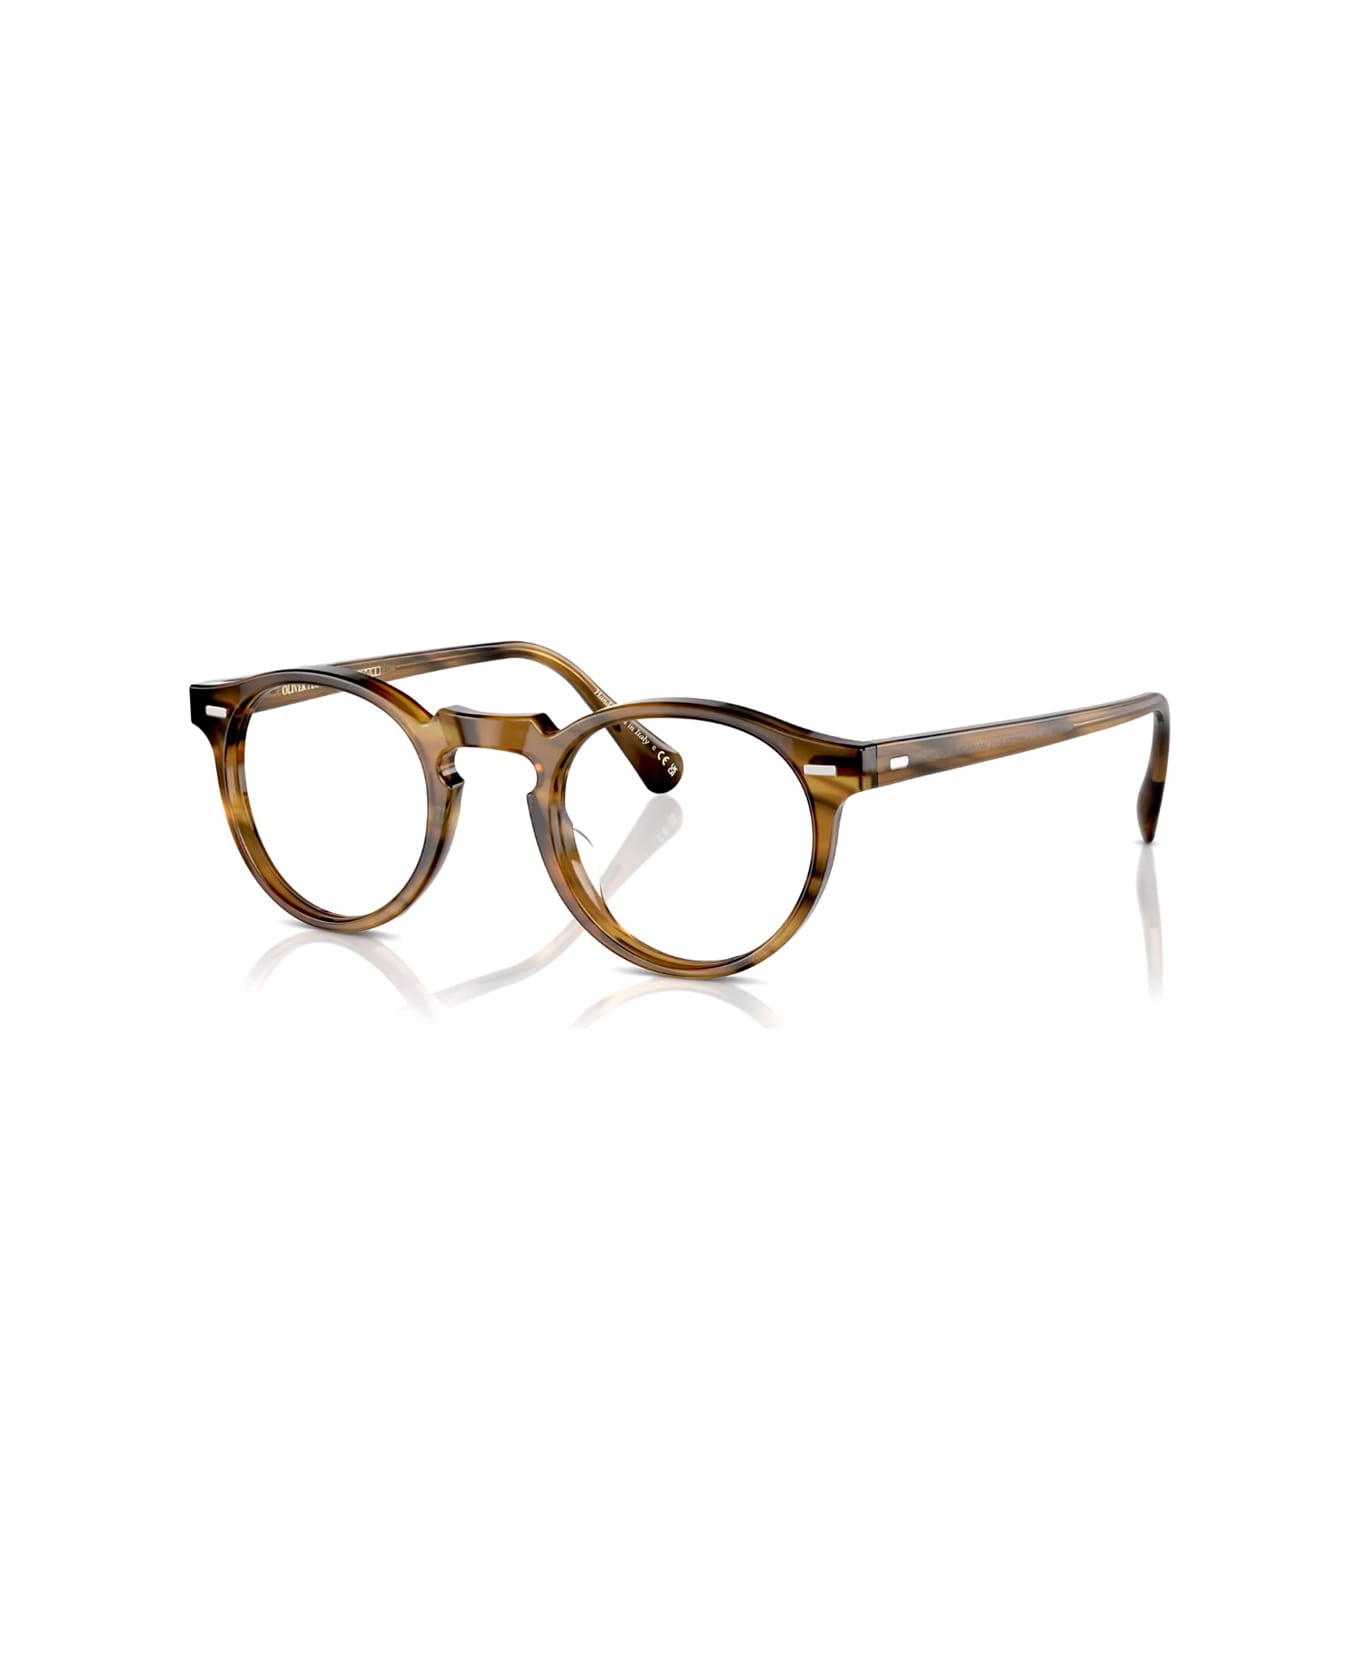 Oliver Peoples Ov5186 - Gregory Peck 1011 Glasses - Marrone アイウェア